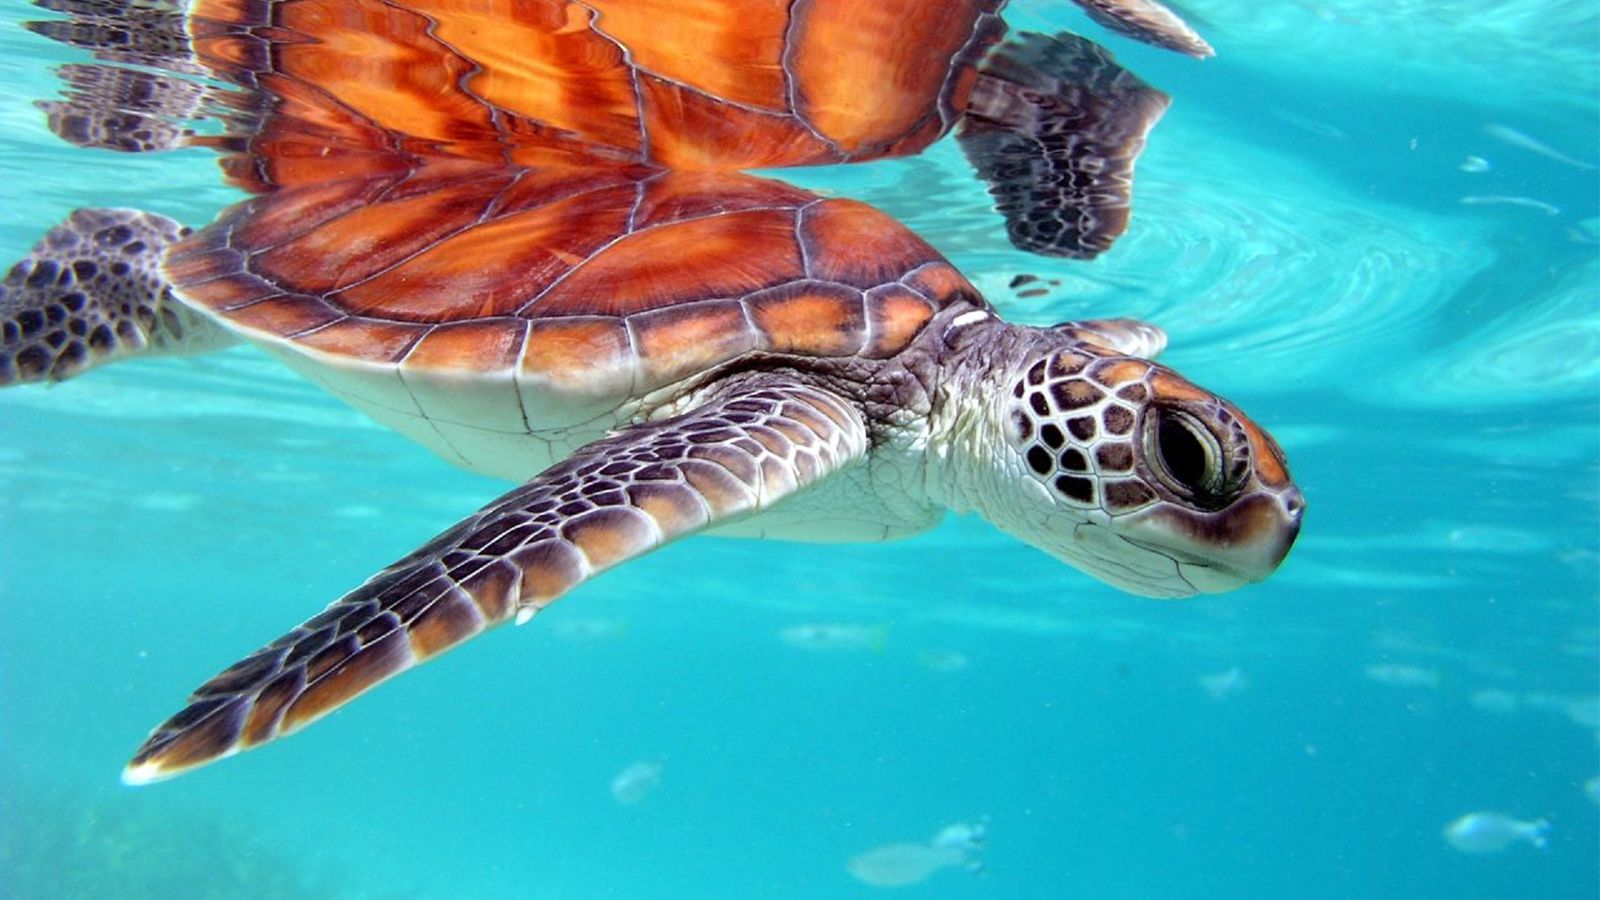 green sea turtle threats